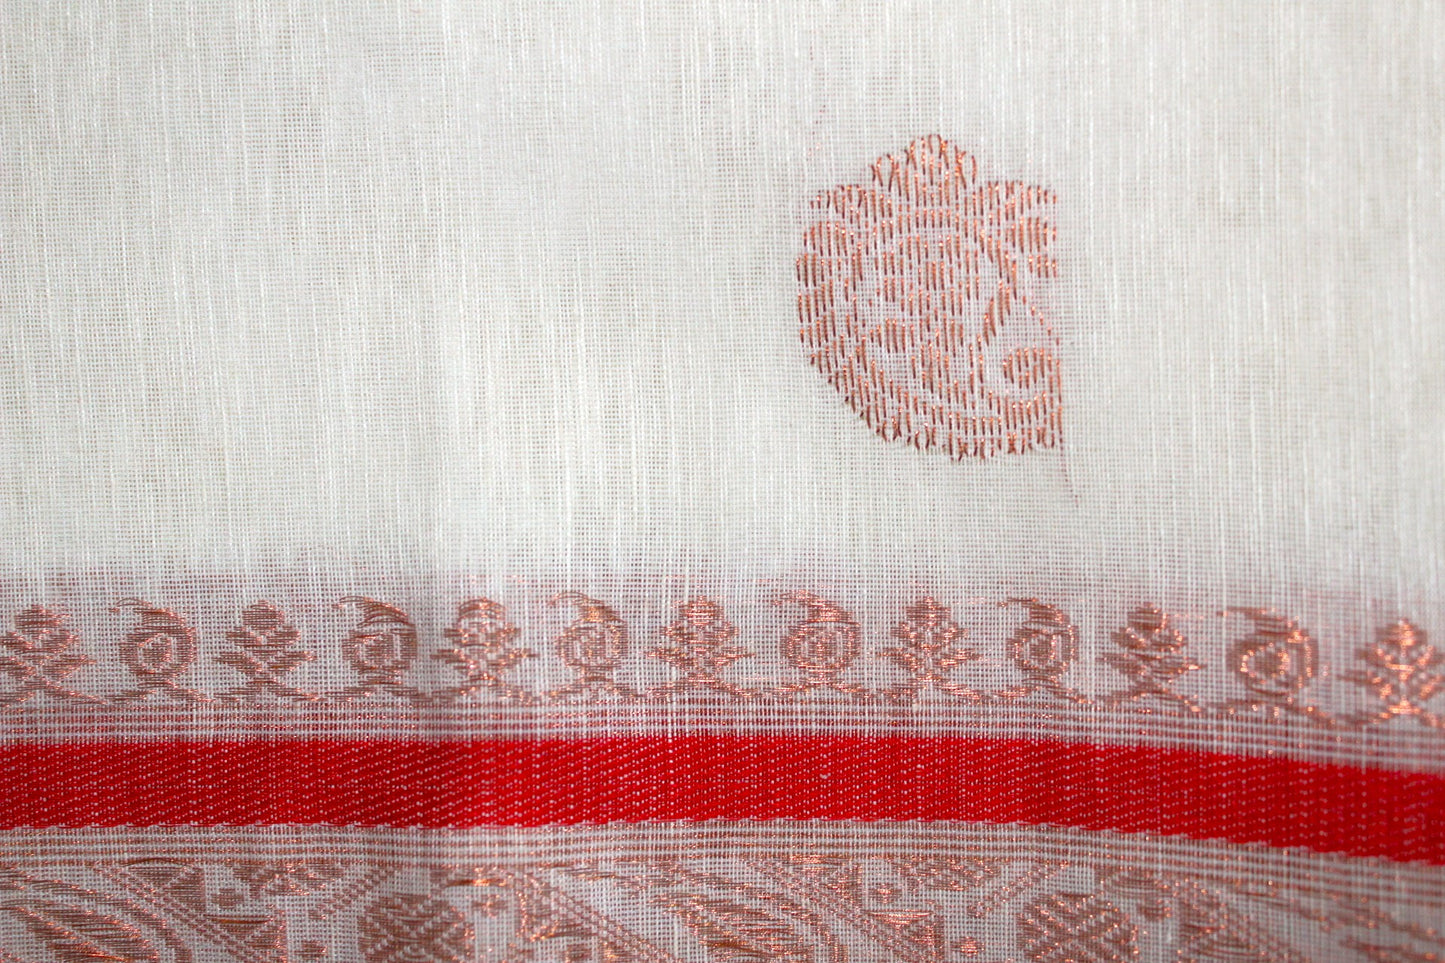 White Organic Linen Banarasi Handloom Saree with Red Border